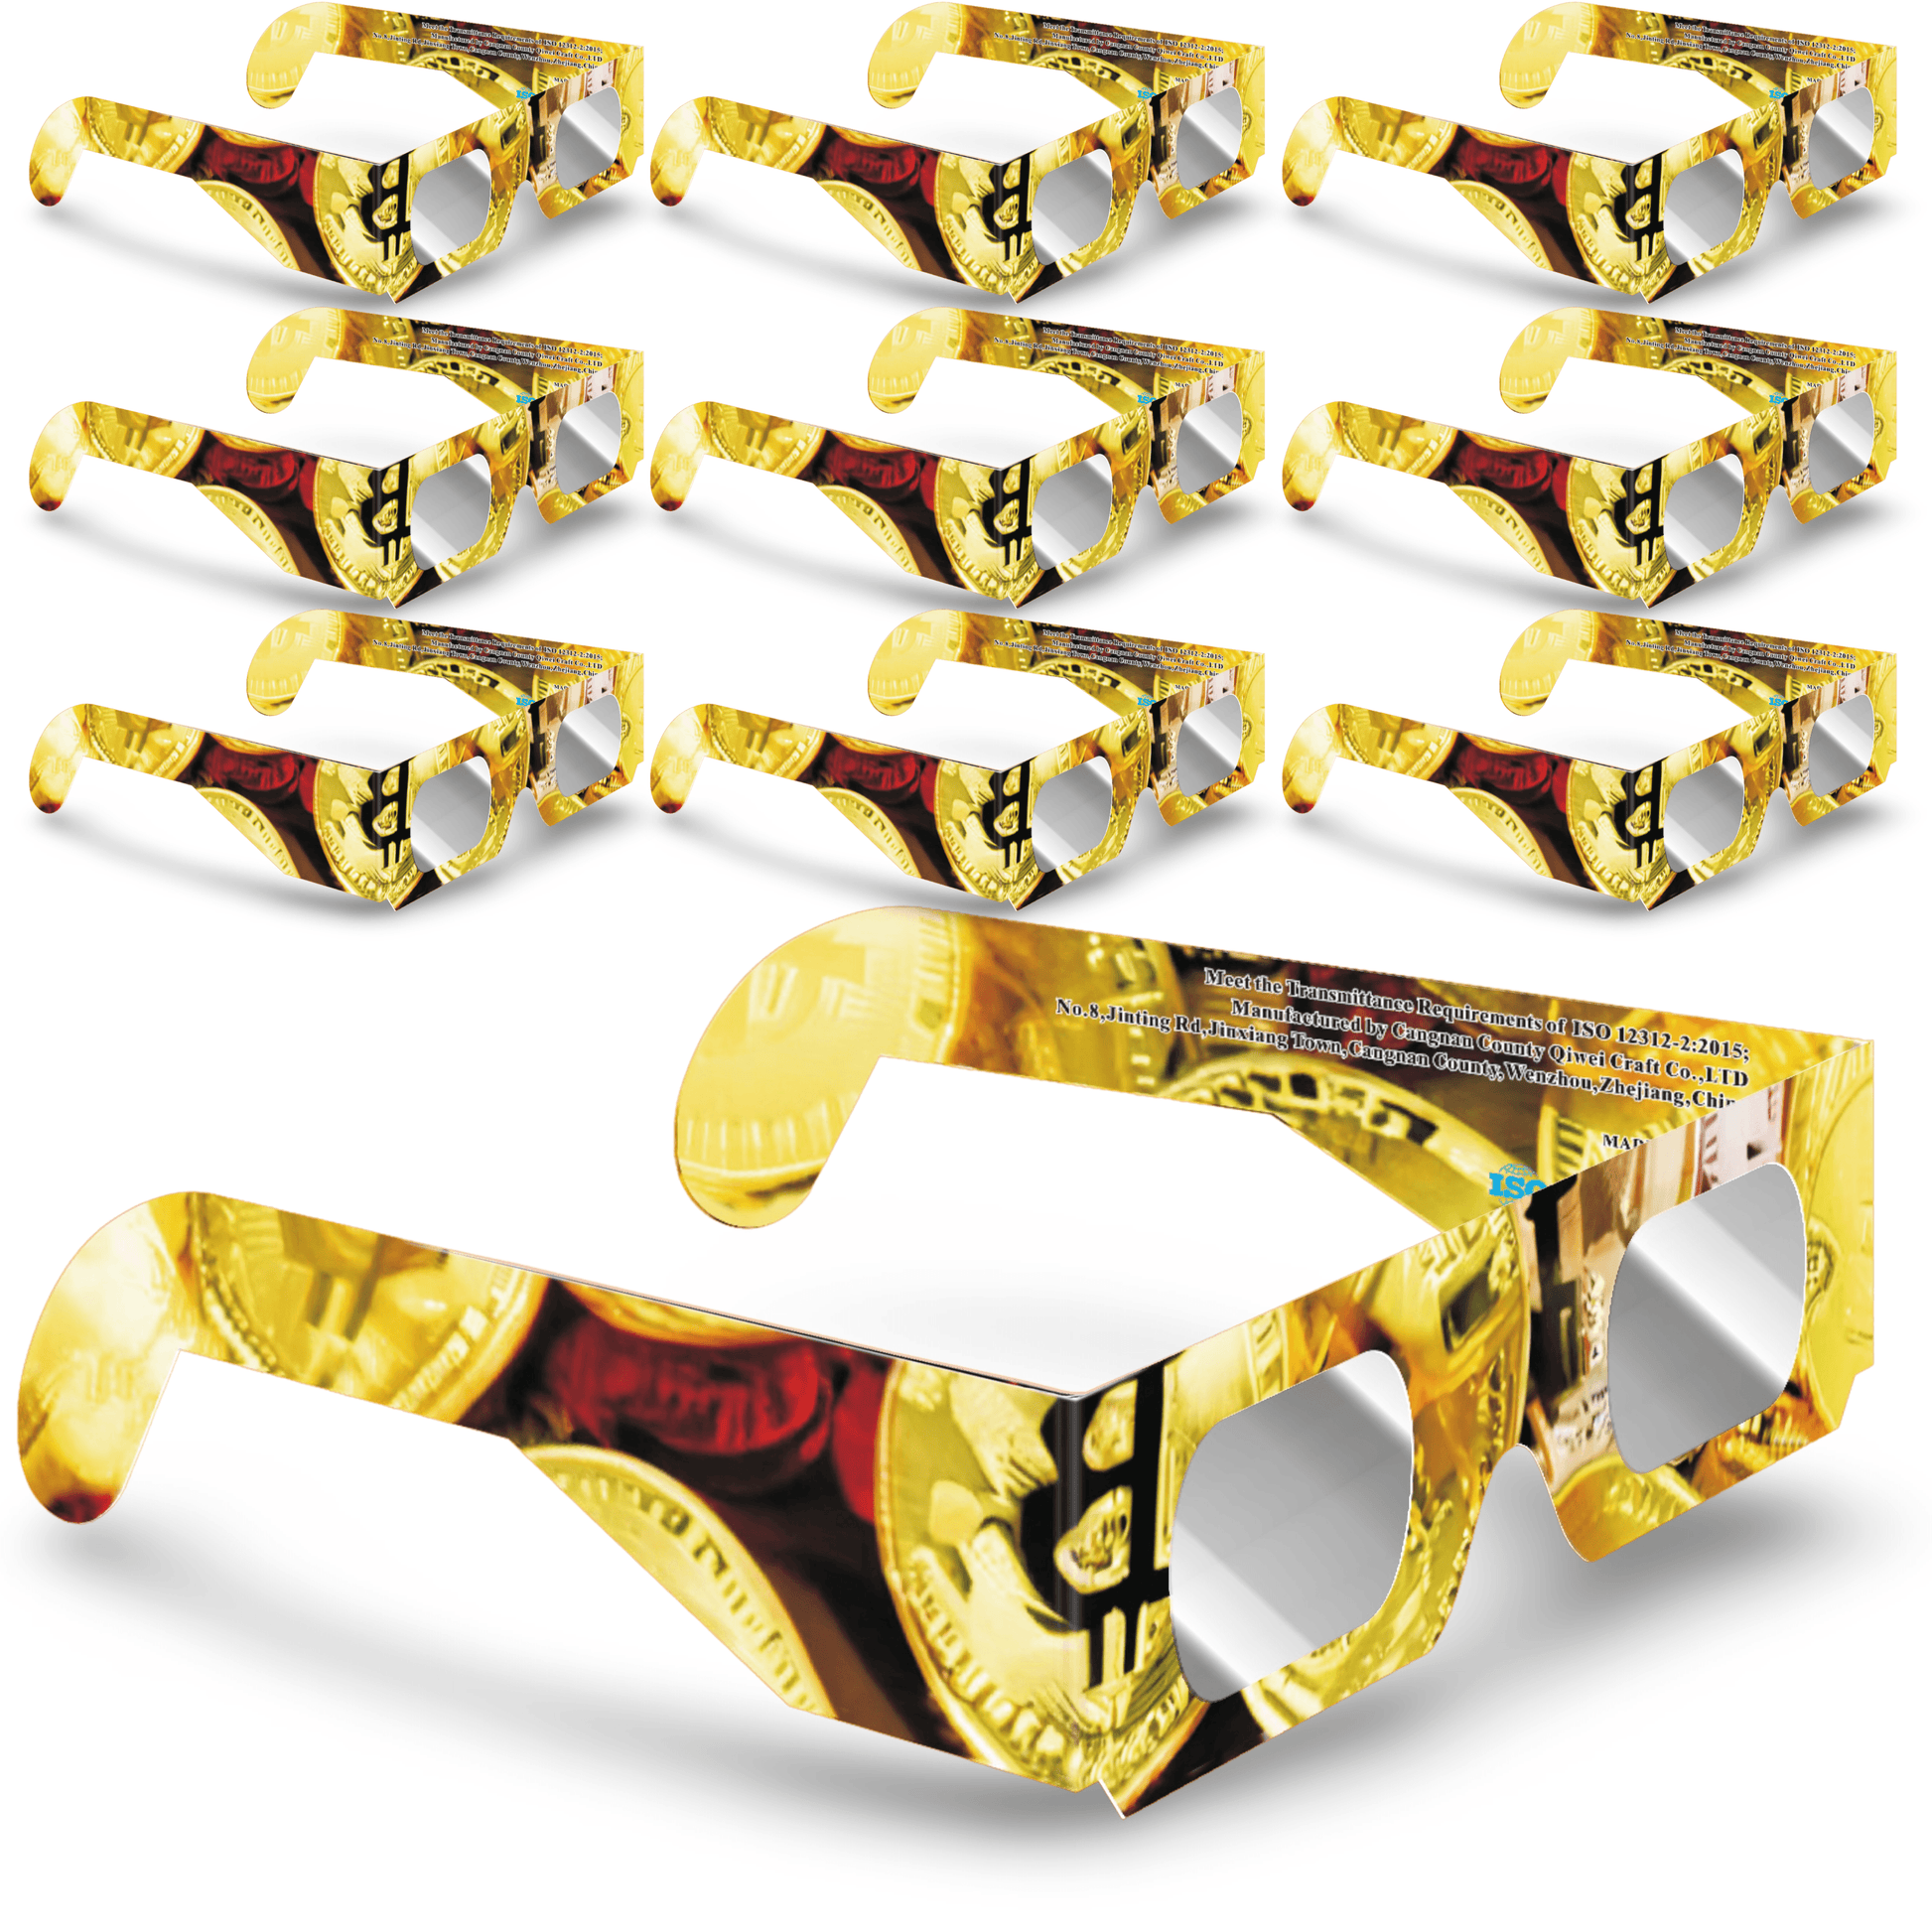 Solar Eclipse Glasses - Bitcoin Crypto Design - Absolute Eclipse